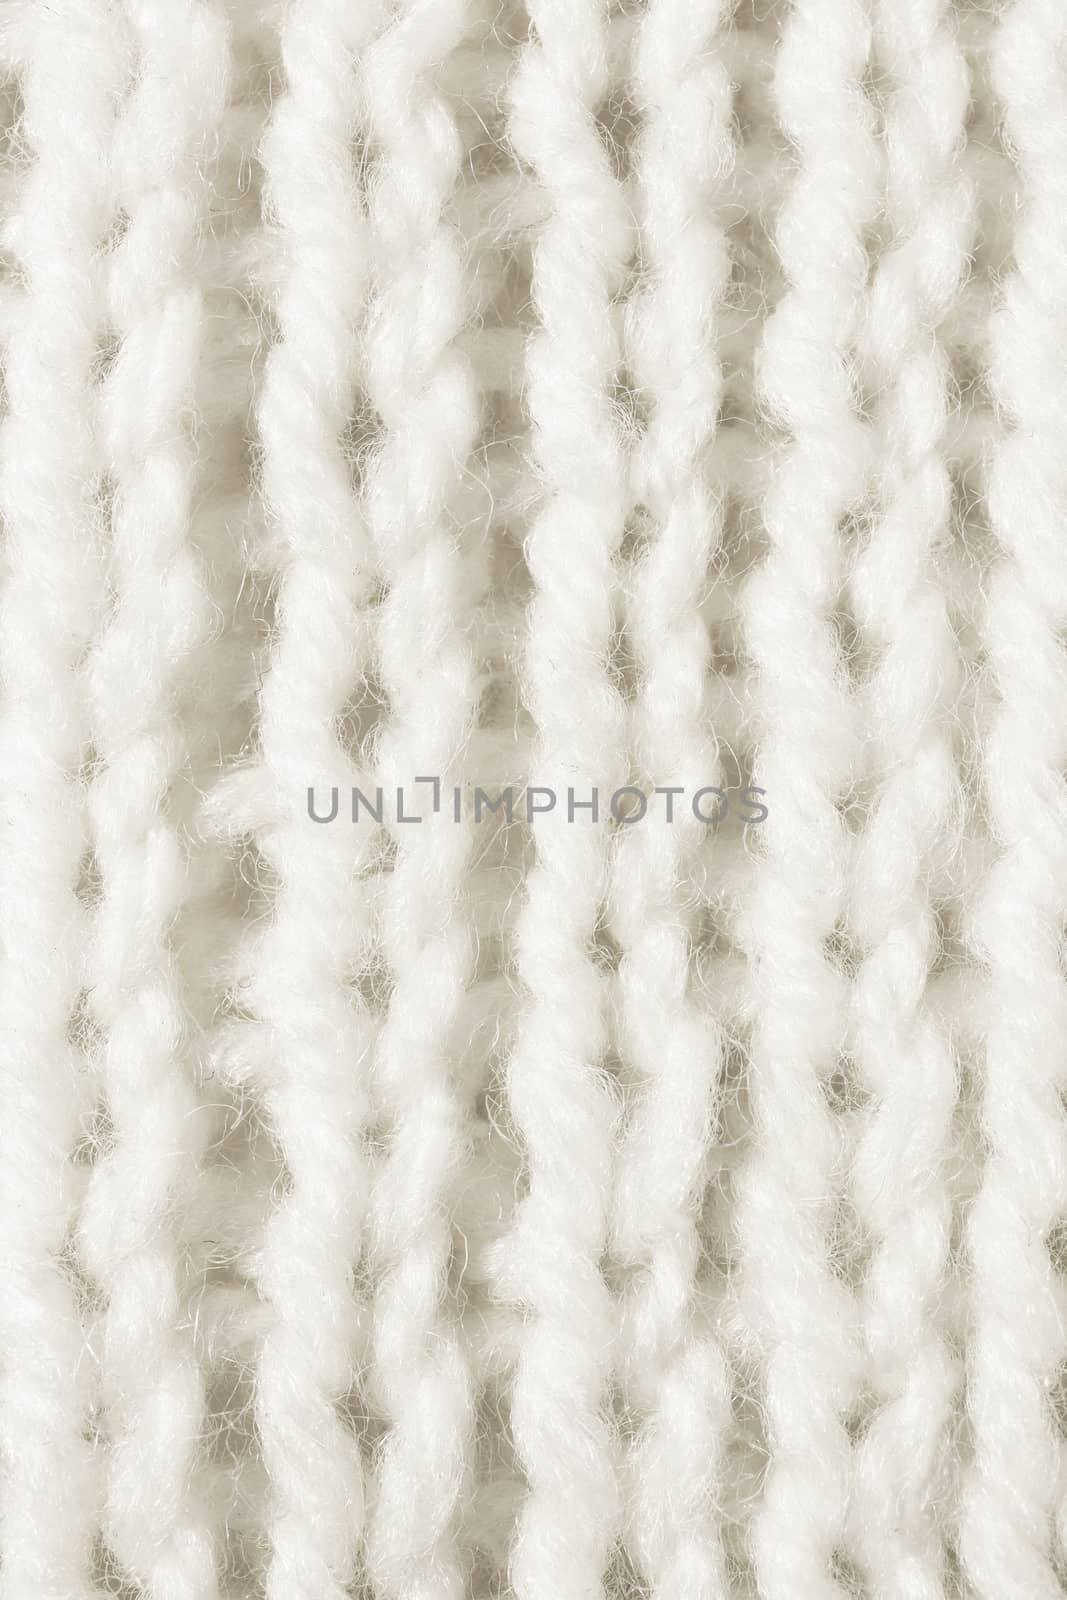 White Wool Knitting Texture. Vertical Across Weaving Crochet Det by sanches812